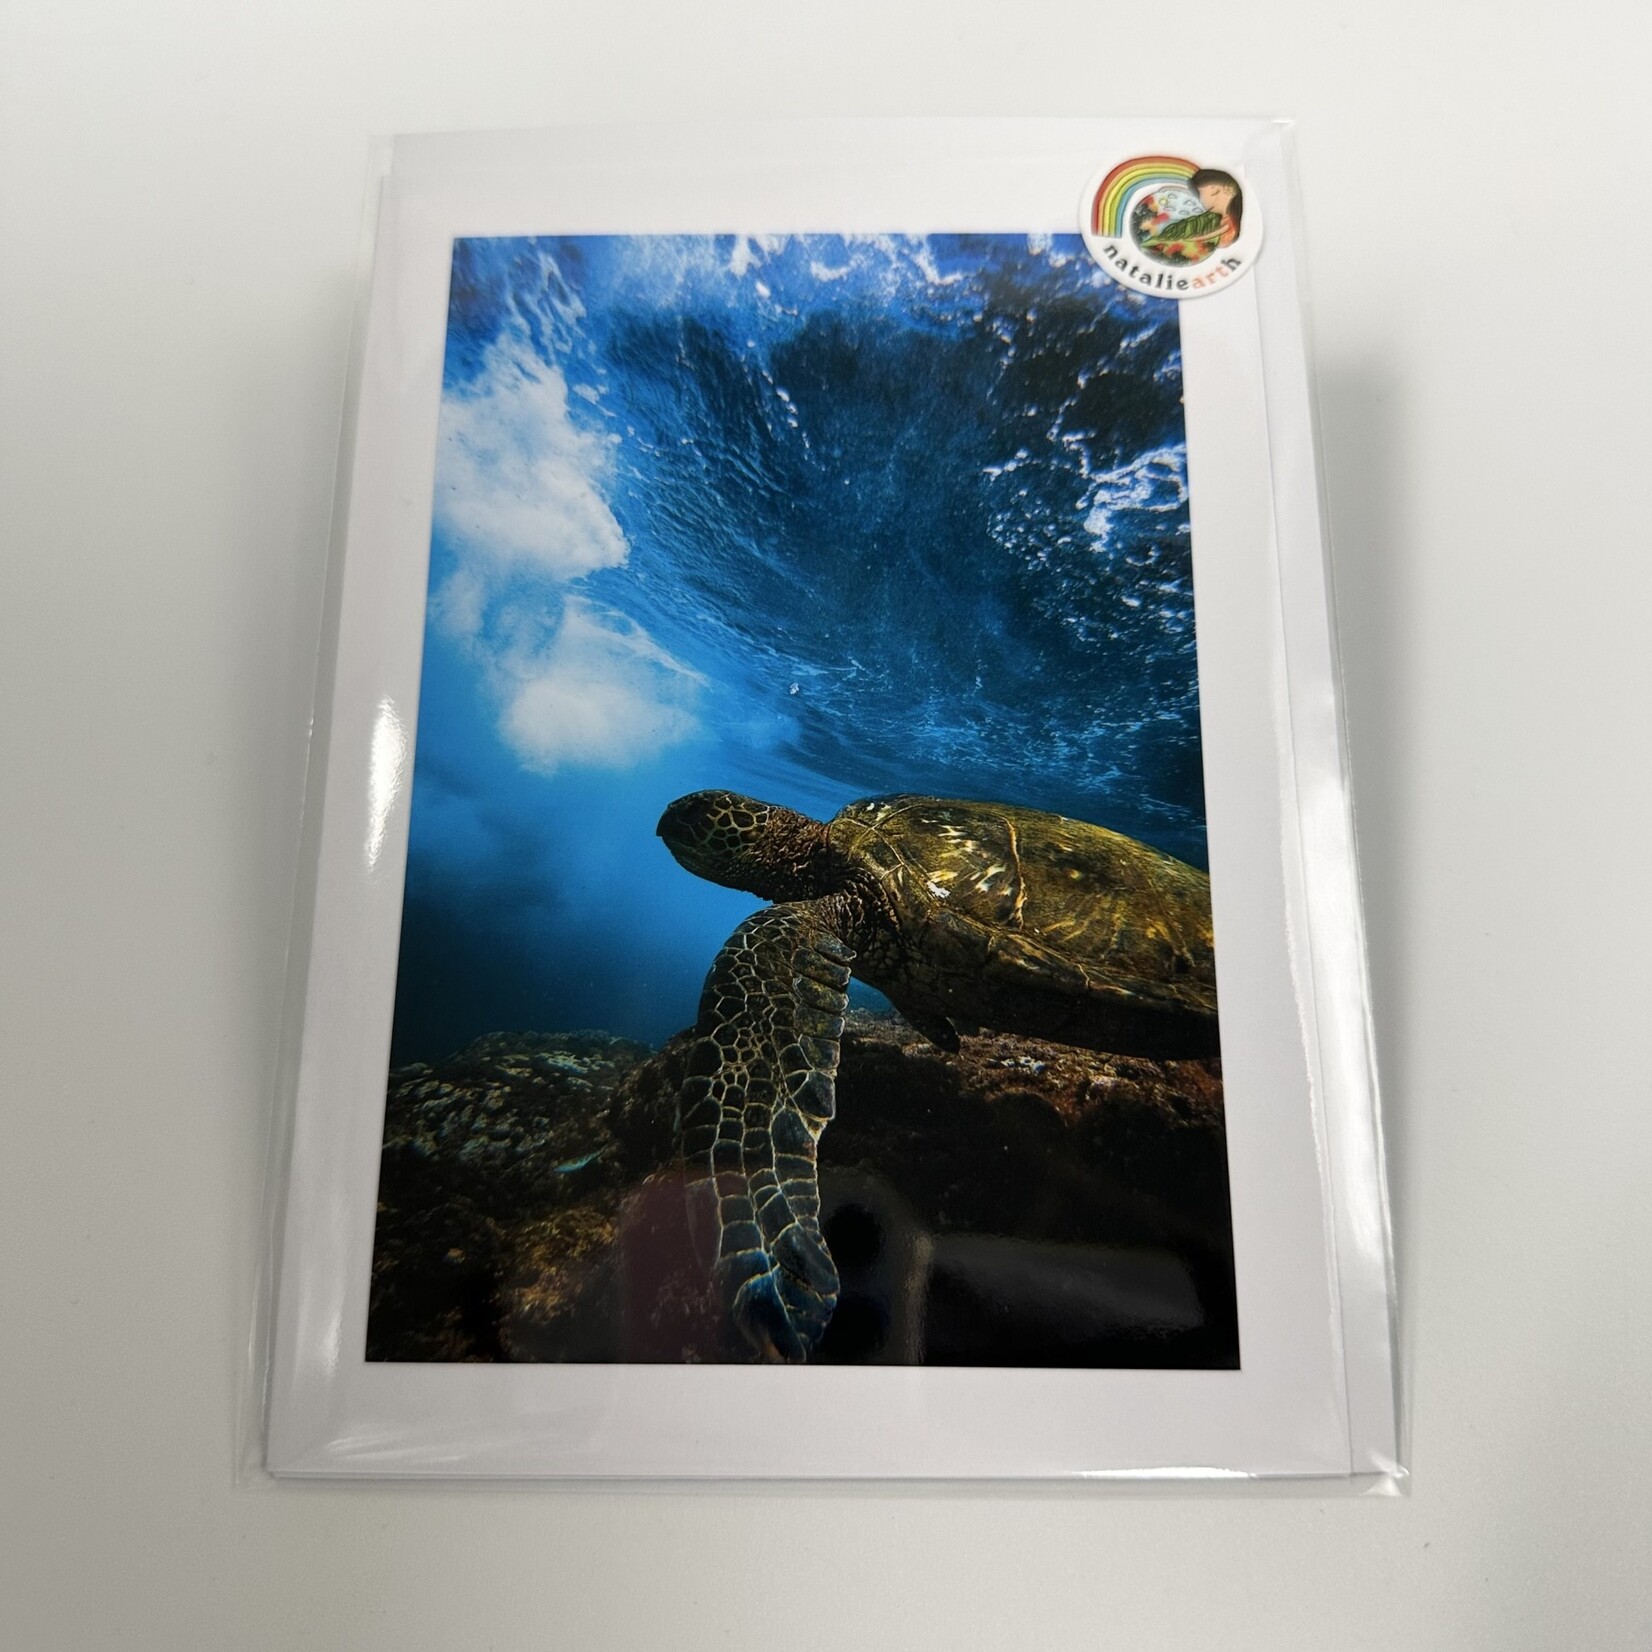 Natalie Earth LLC A Honu World - Frame-able Greeting Card 5” x 7”